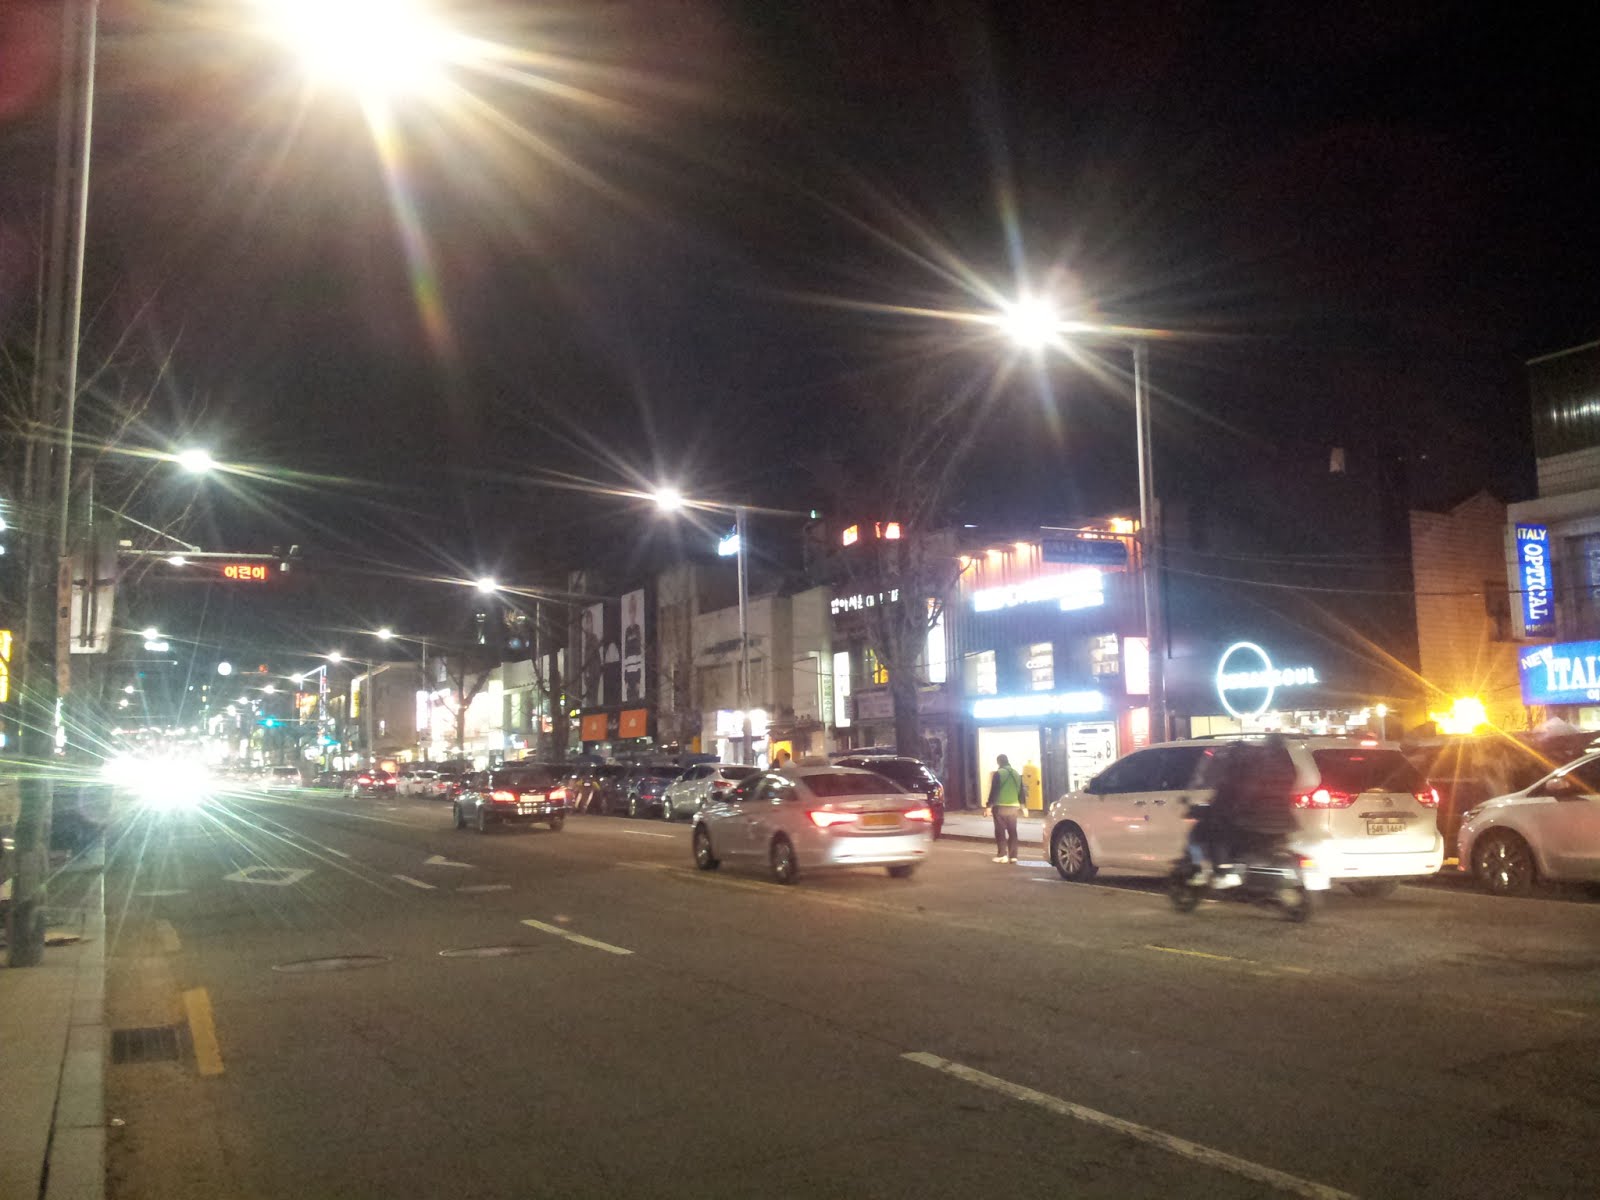 Itaewon Street